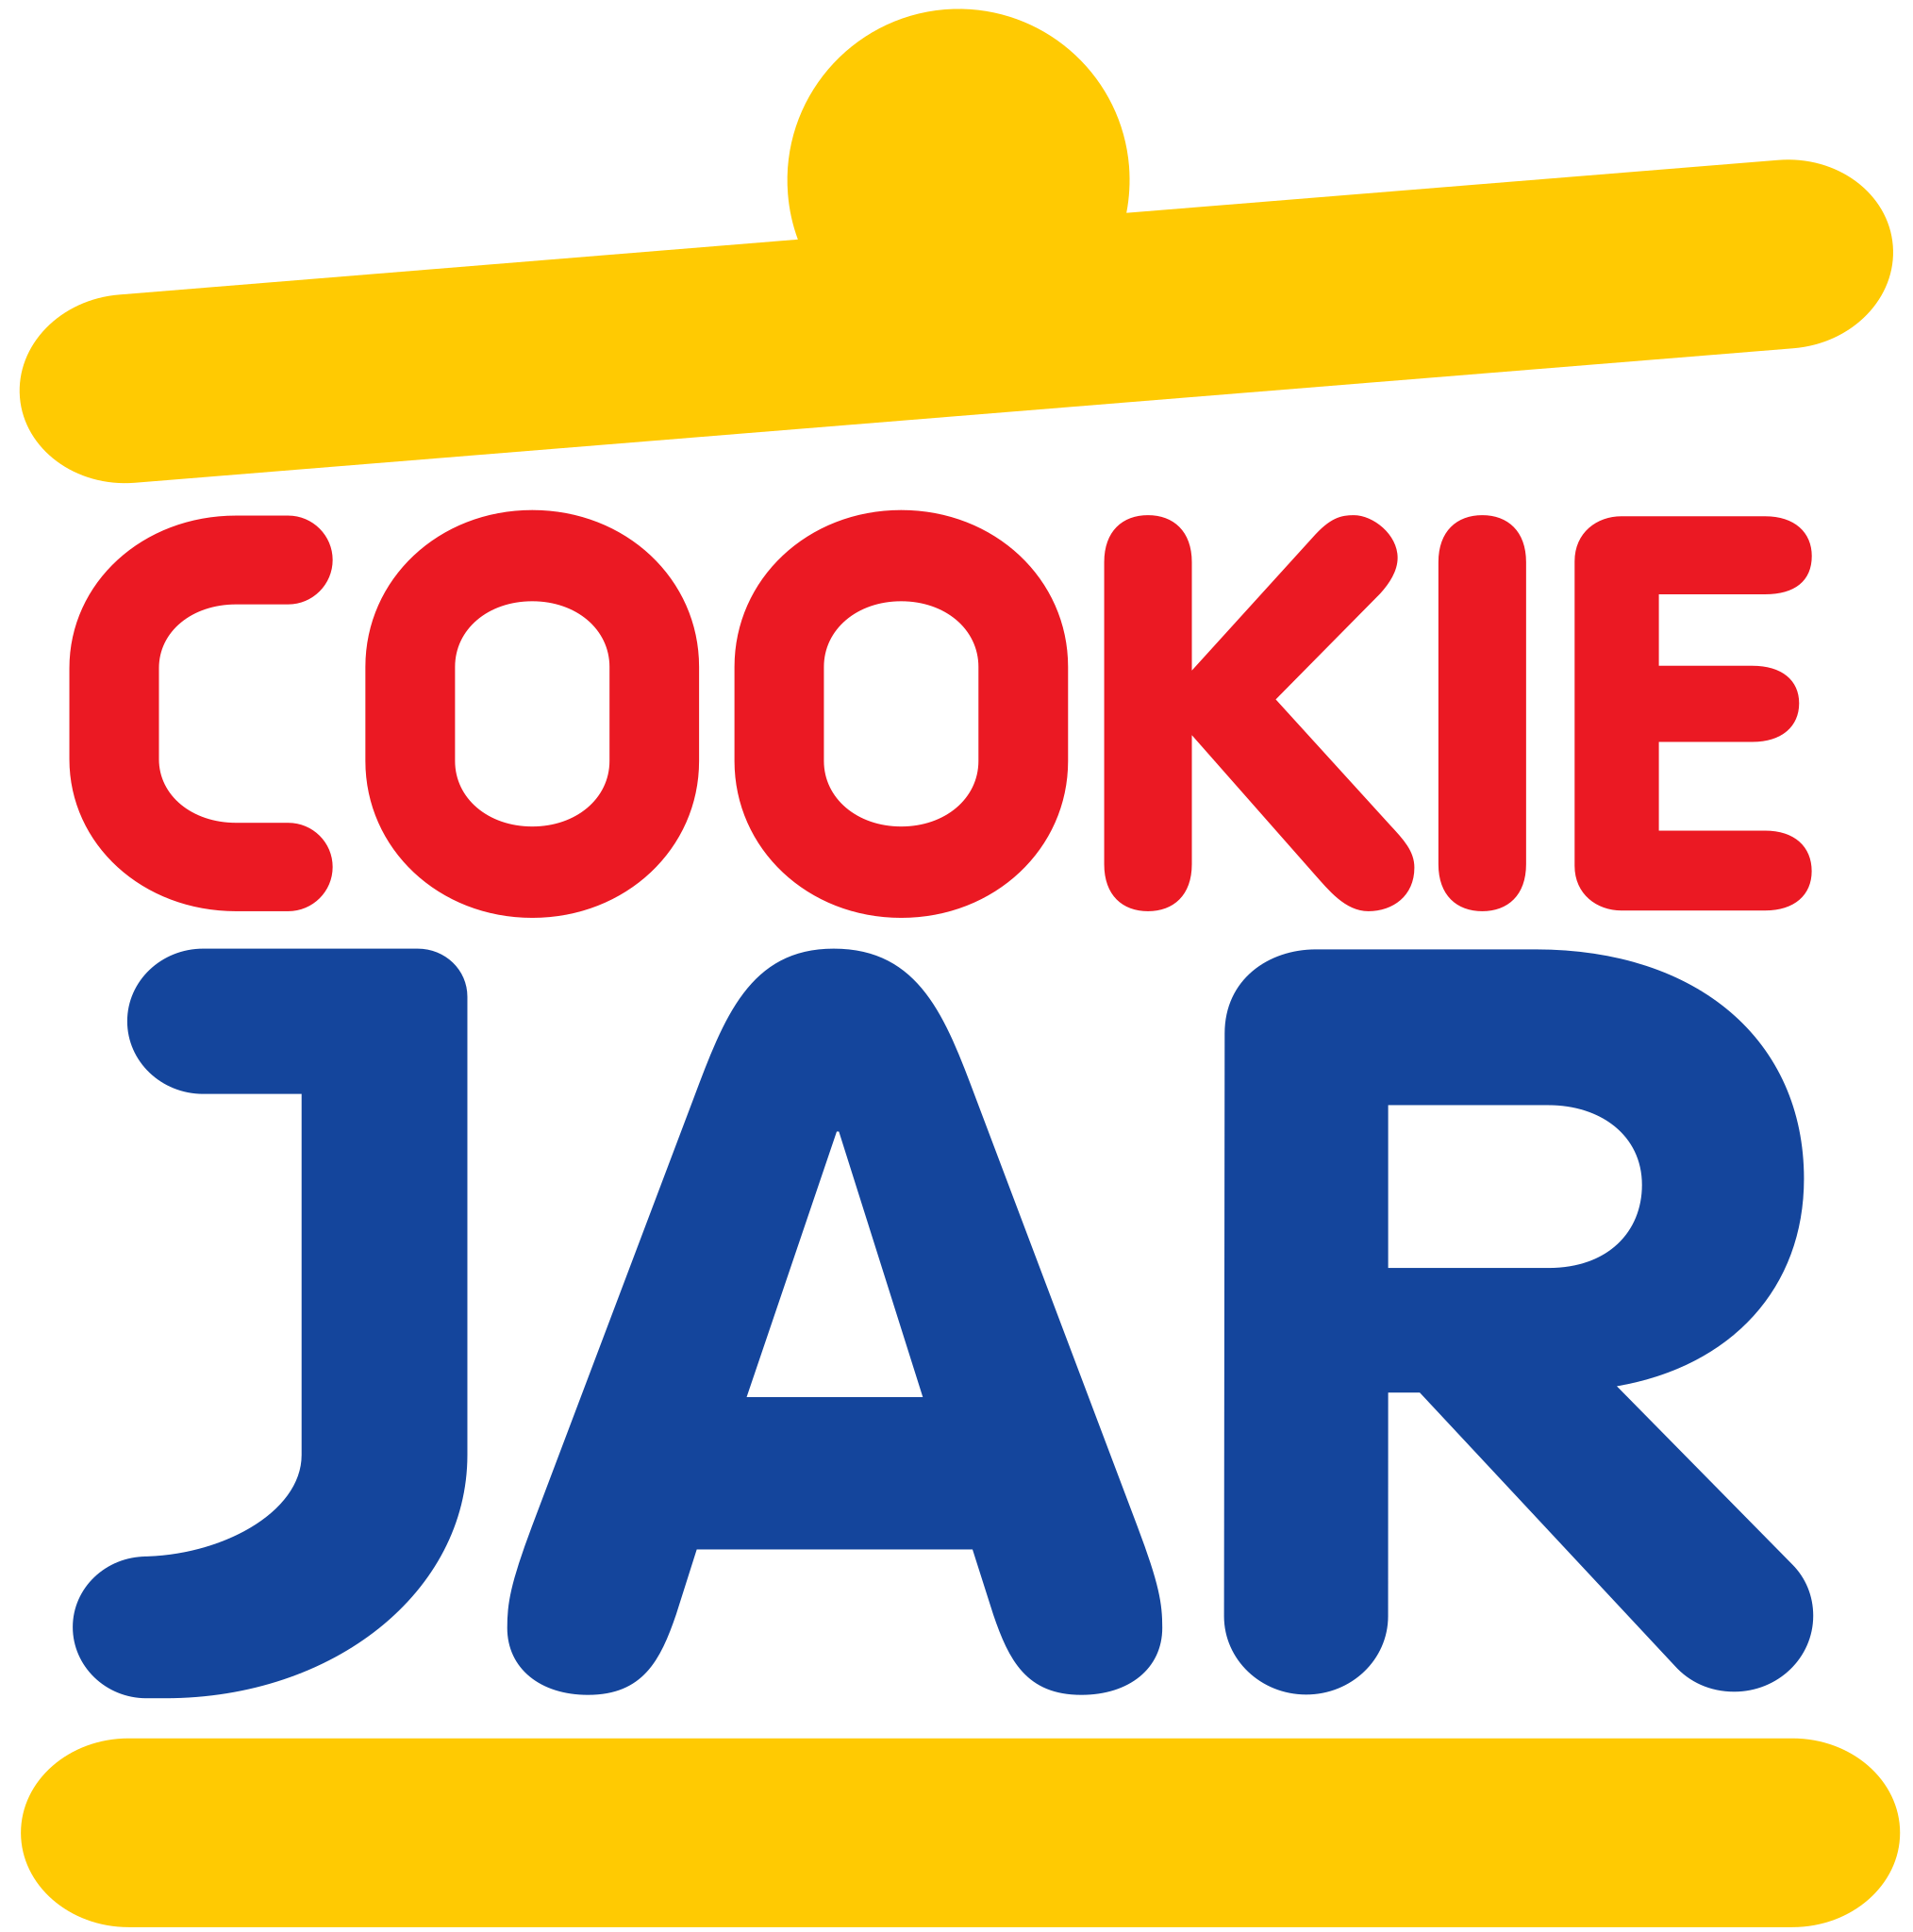 Cookie Jar Group logo.svg.png